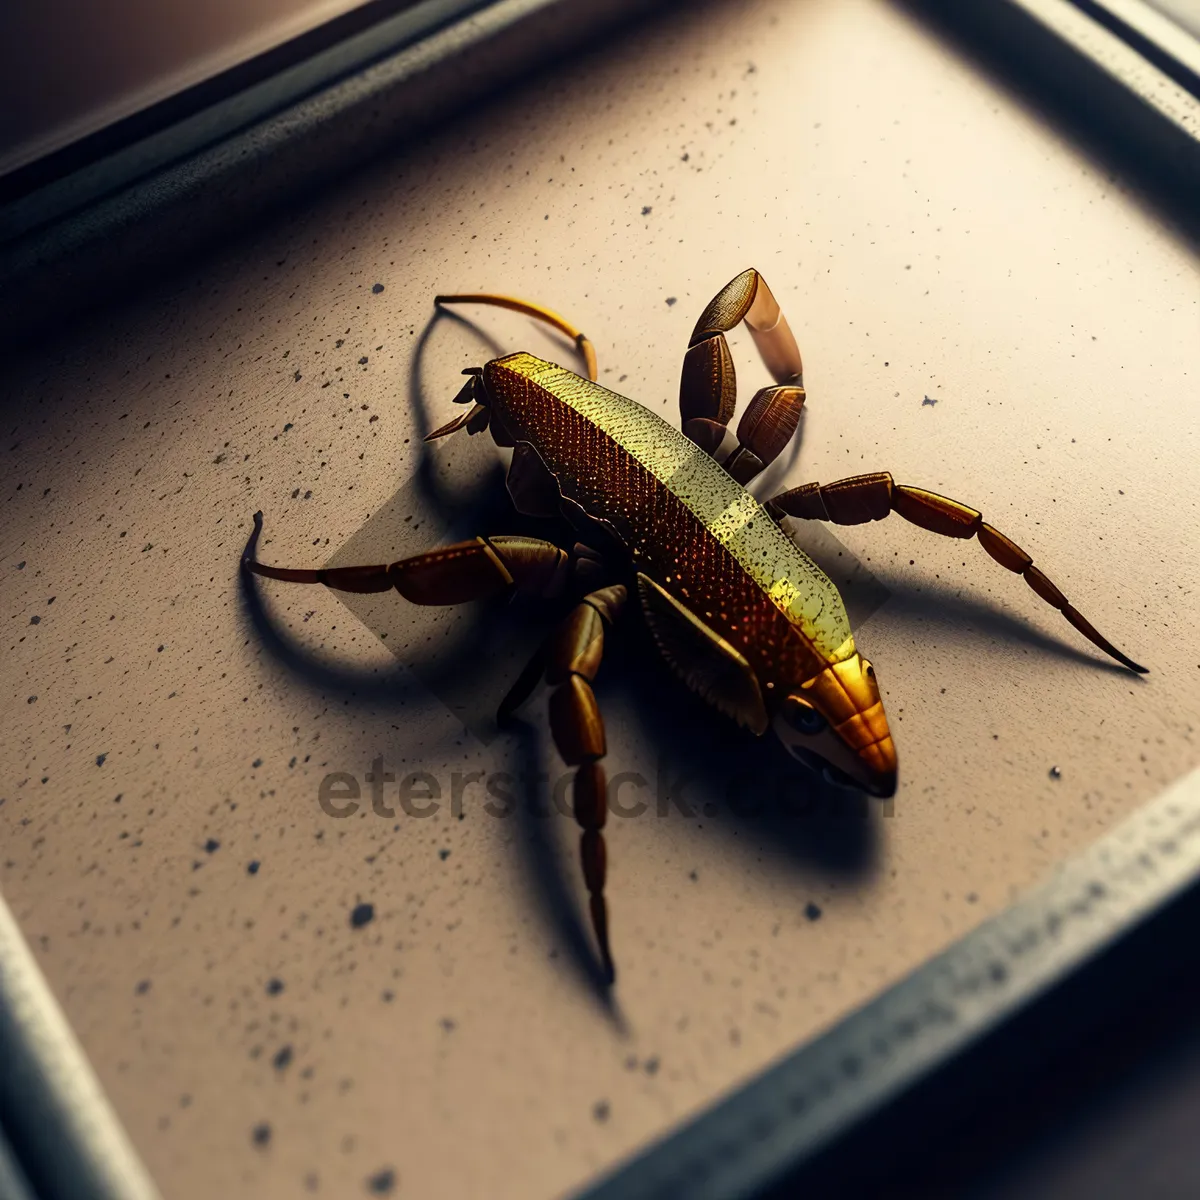 Picture of Crawling Arthropod Trio: Crab, Scorpion, Beetle